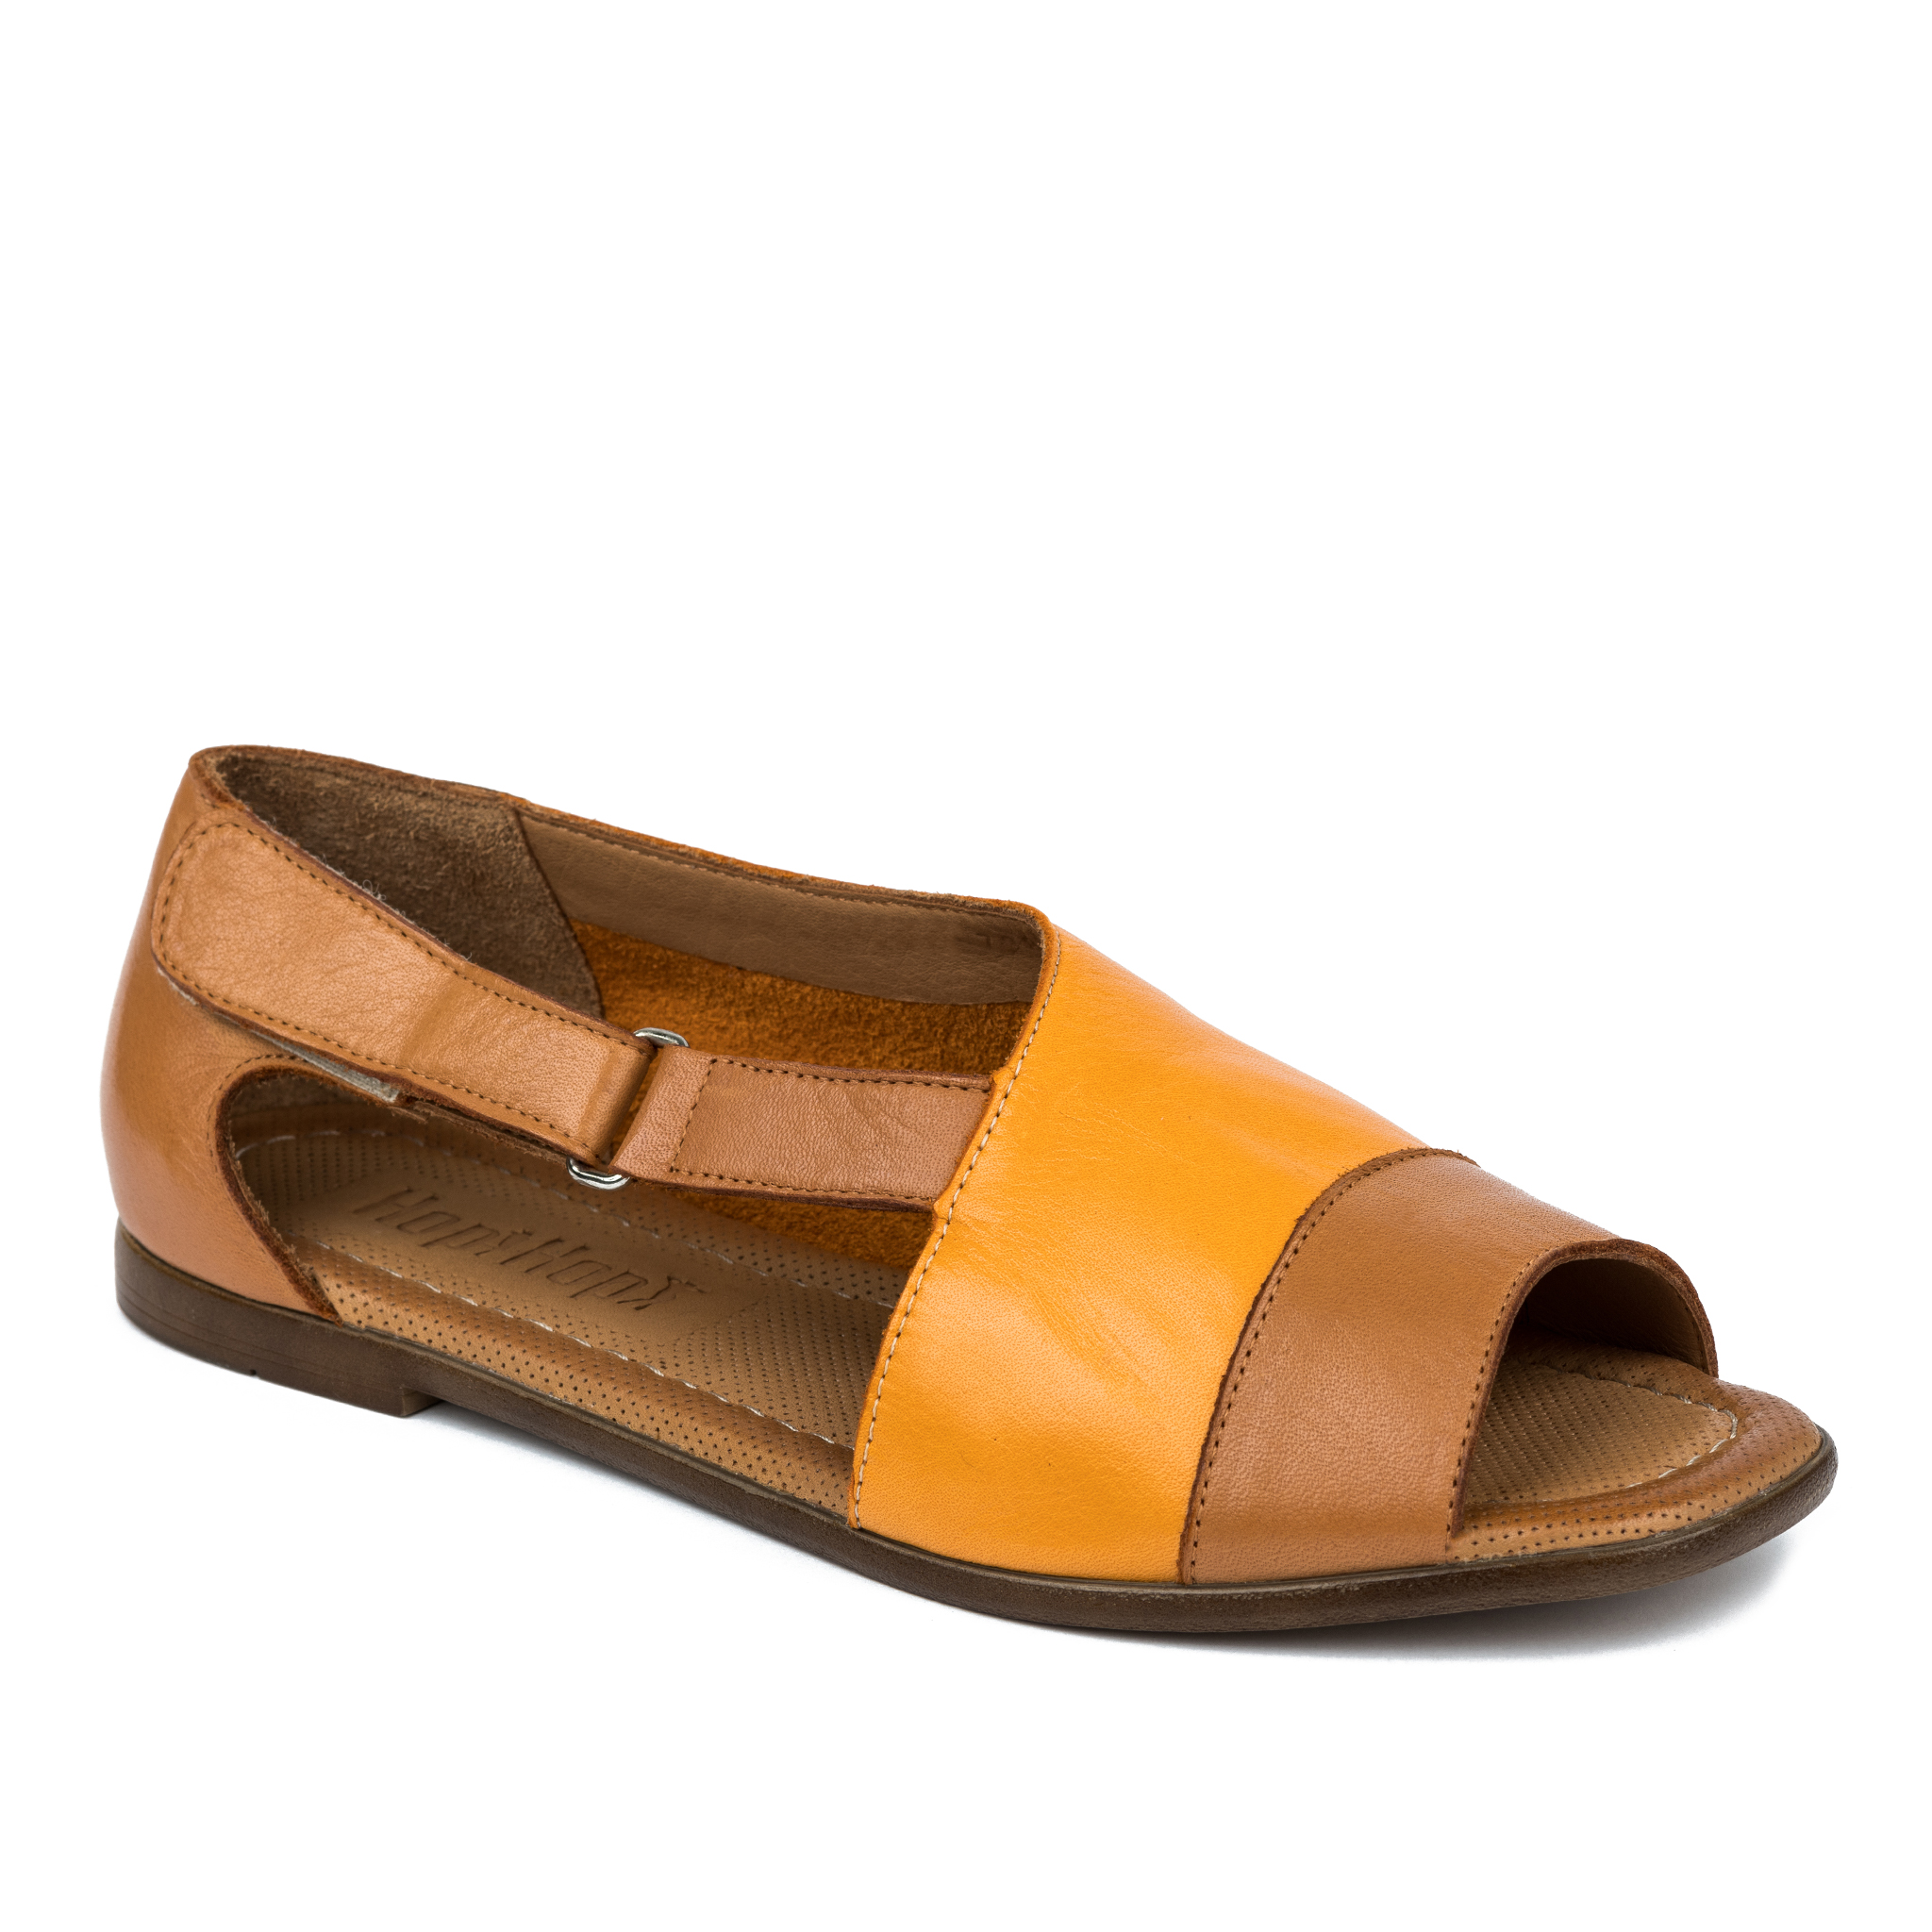 Leather sandals A791 - ORANGE